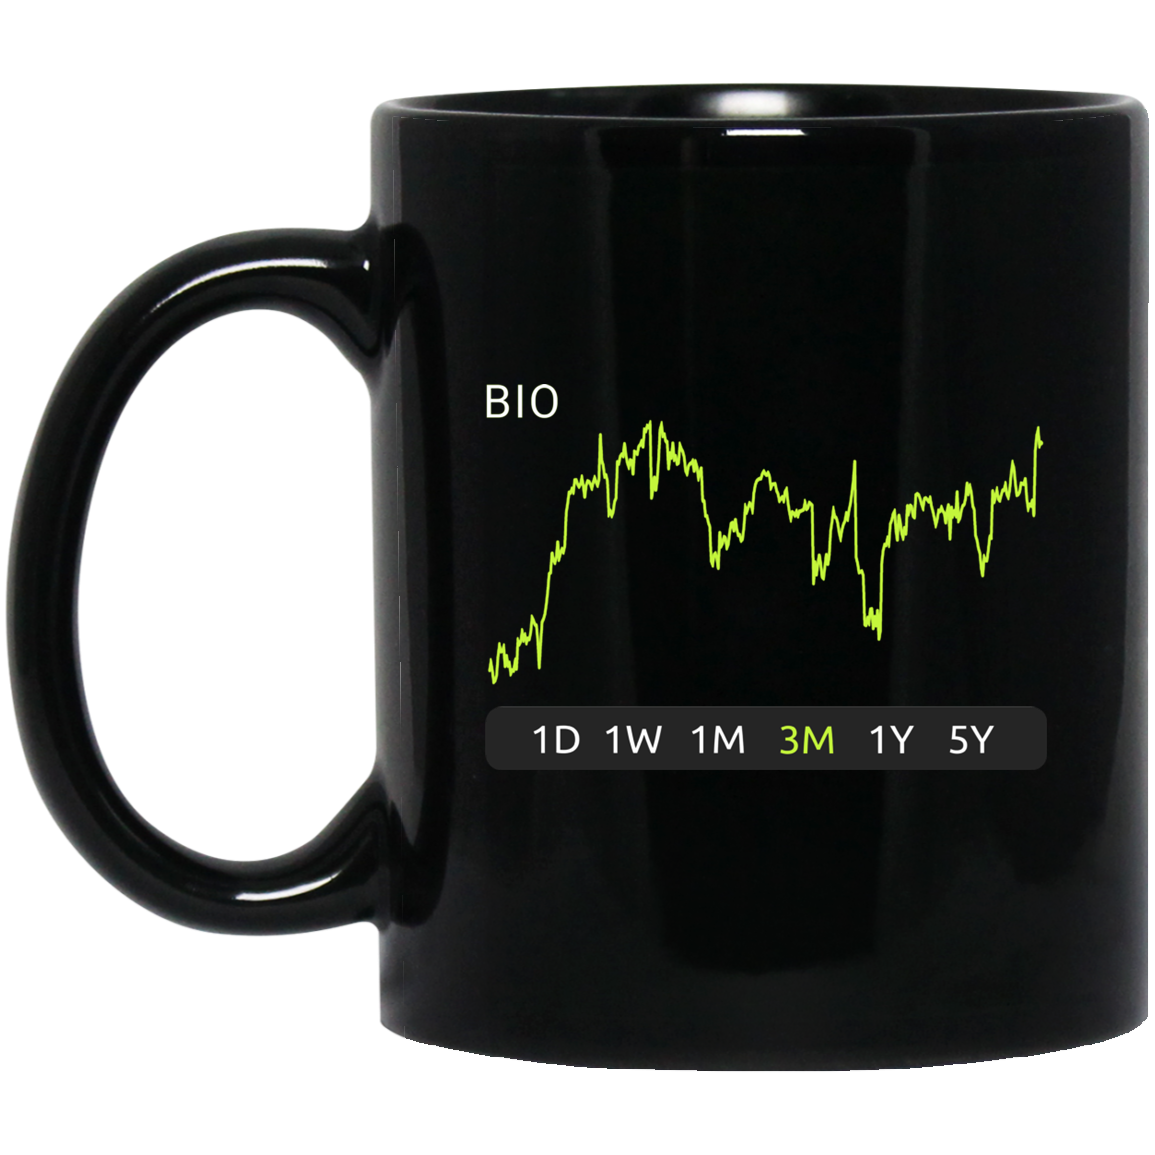 BIO Stock 3m Mug